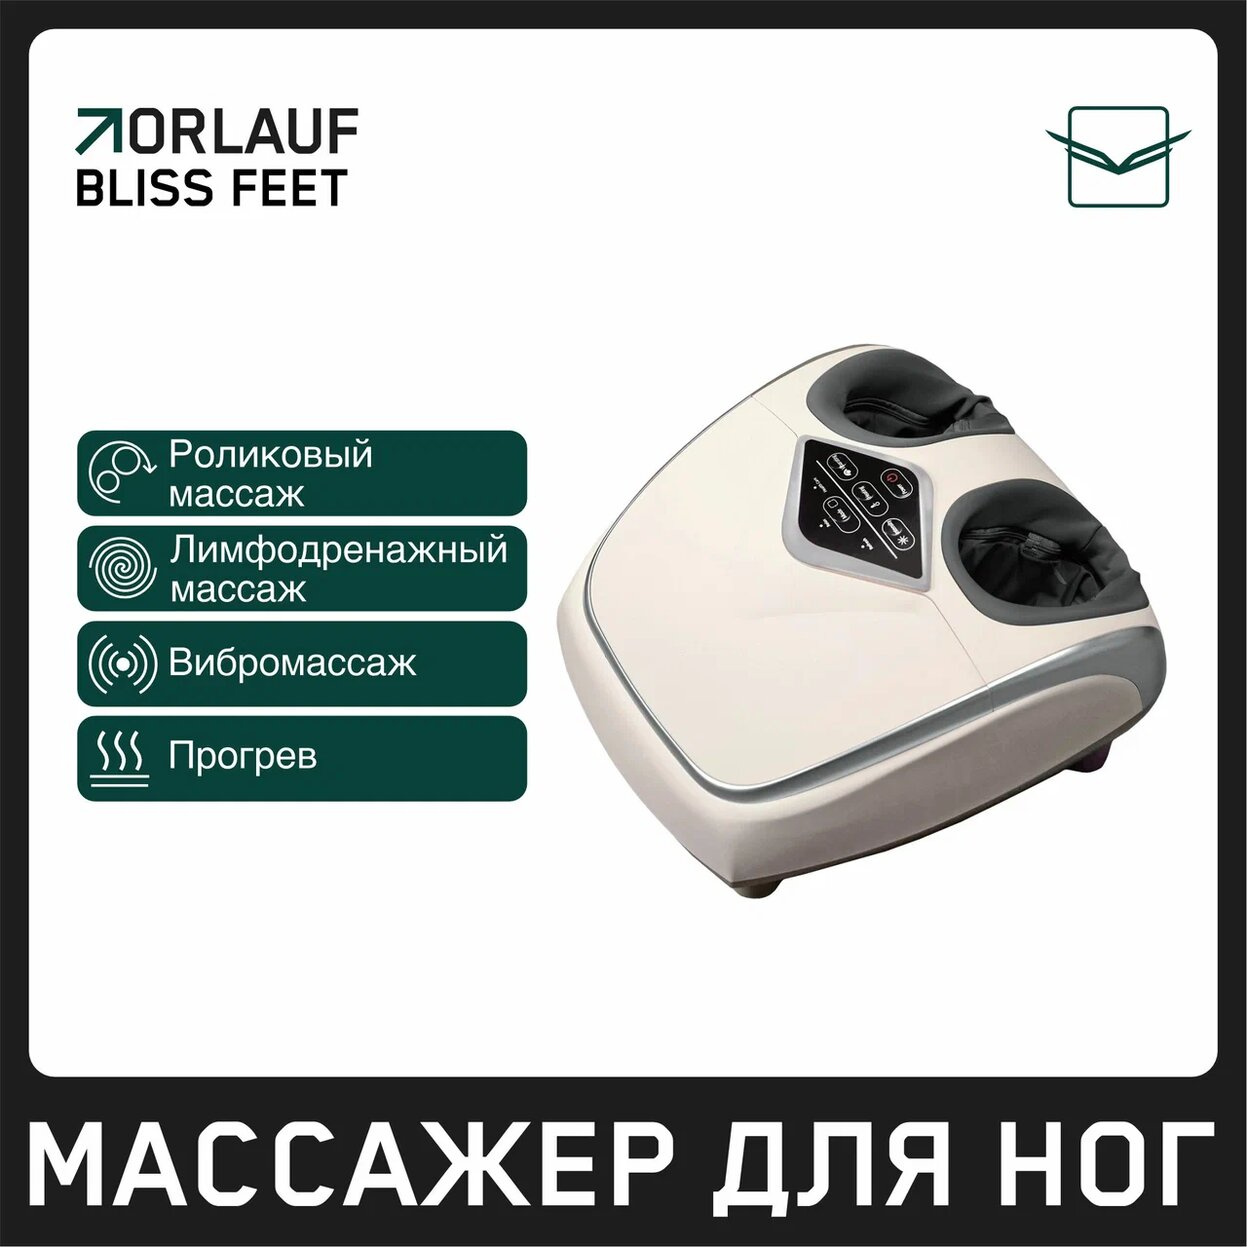 Orlauf Bliss Feet из каталога массажеров в Волгограде по цене 27600 ₽